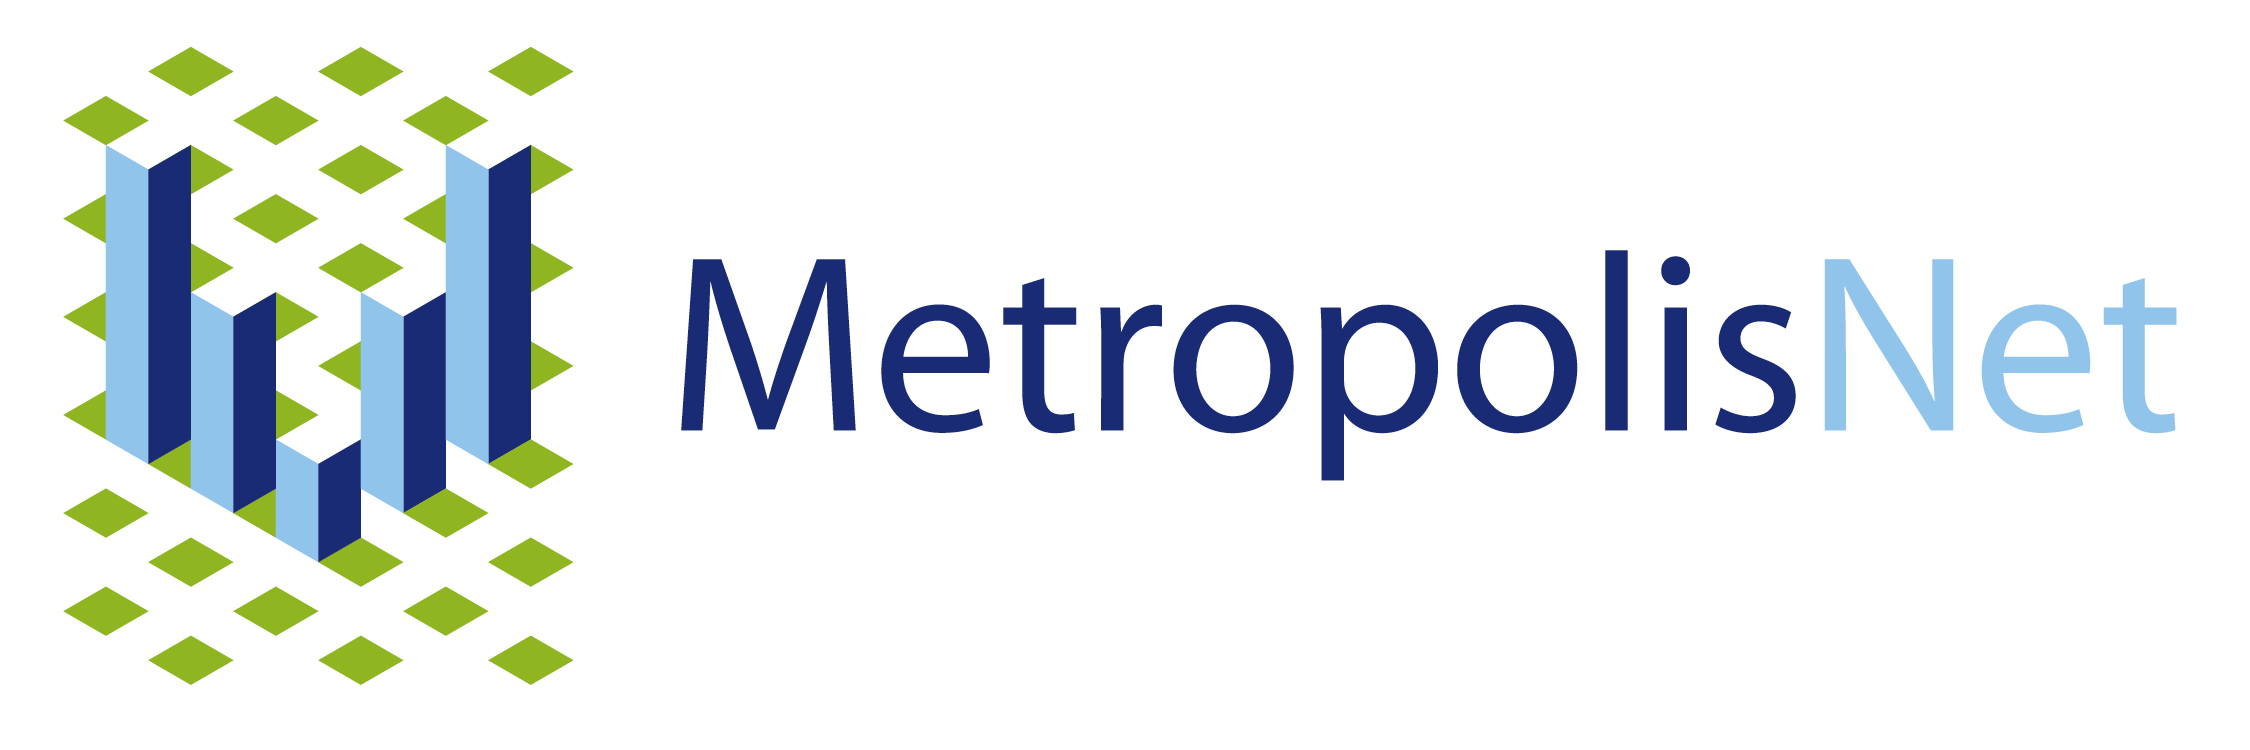 MetropolisNet_Logo_noClaim_CMYK.jpg